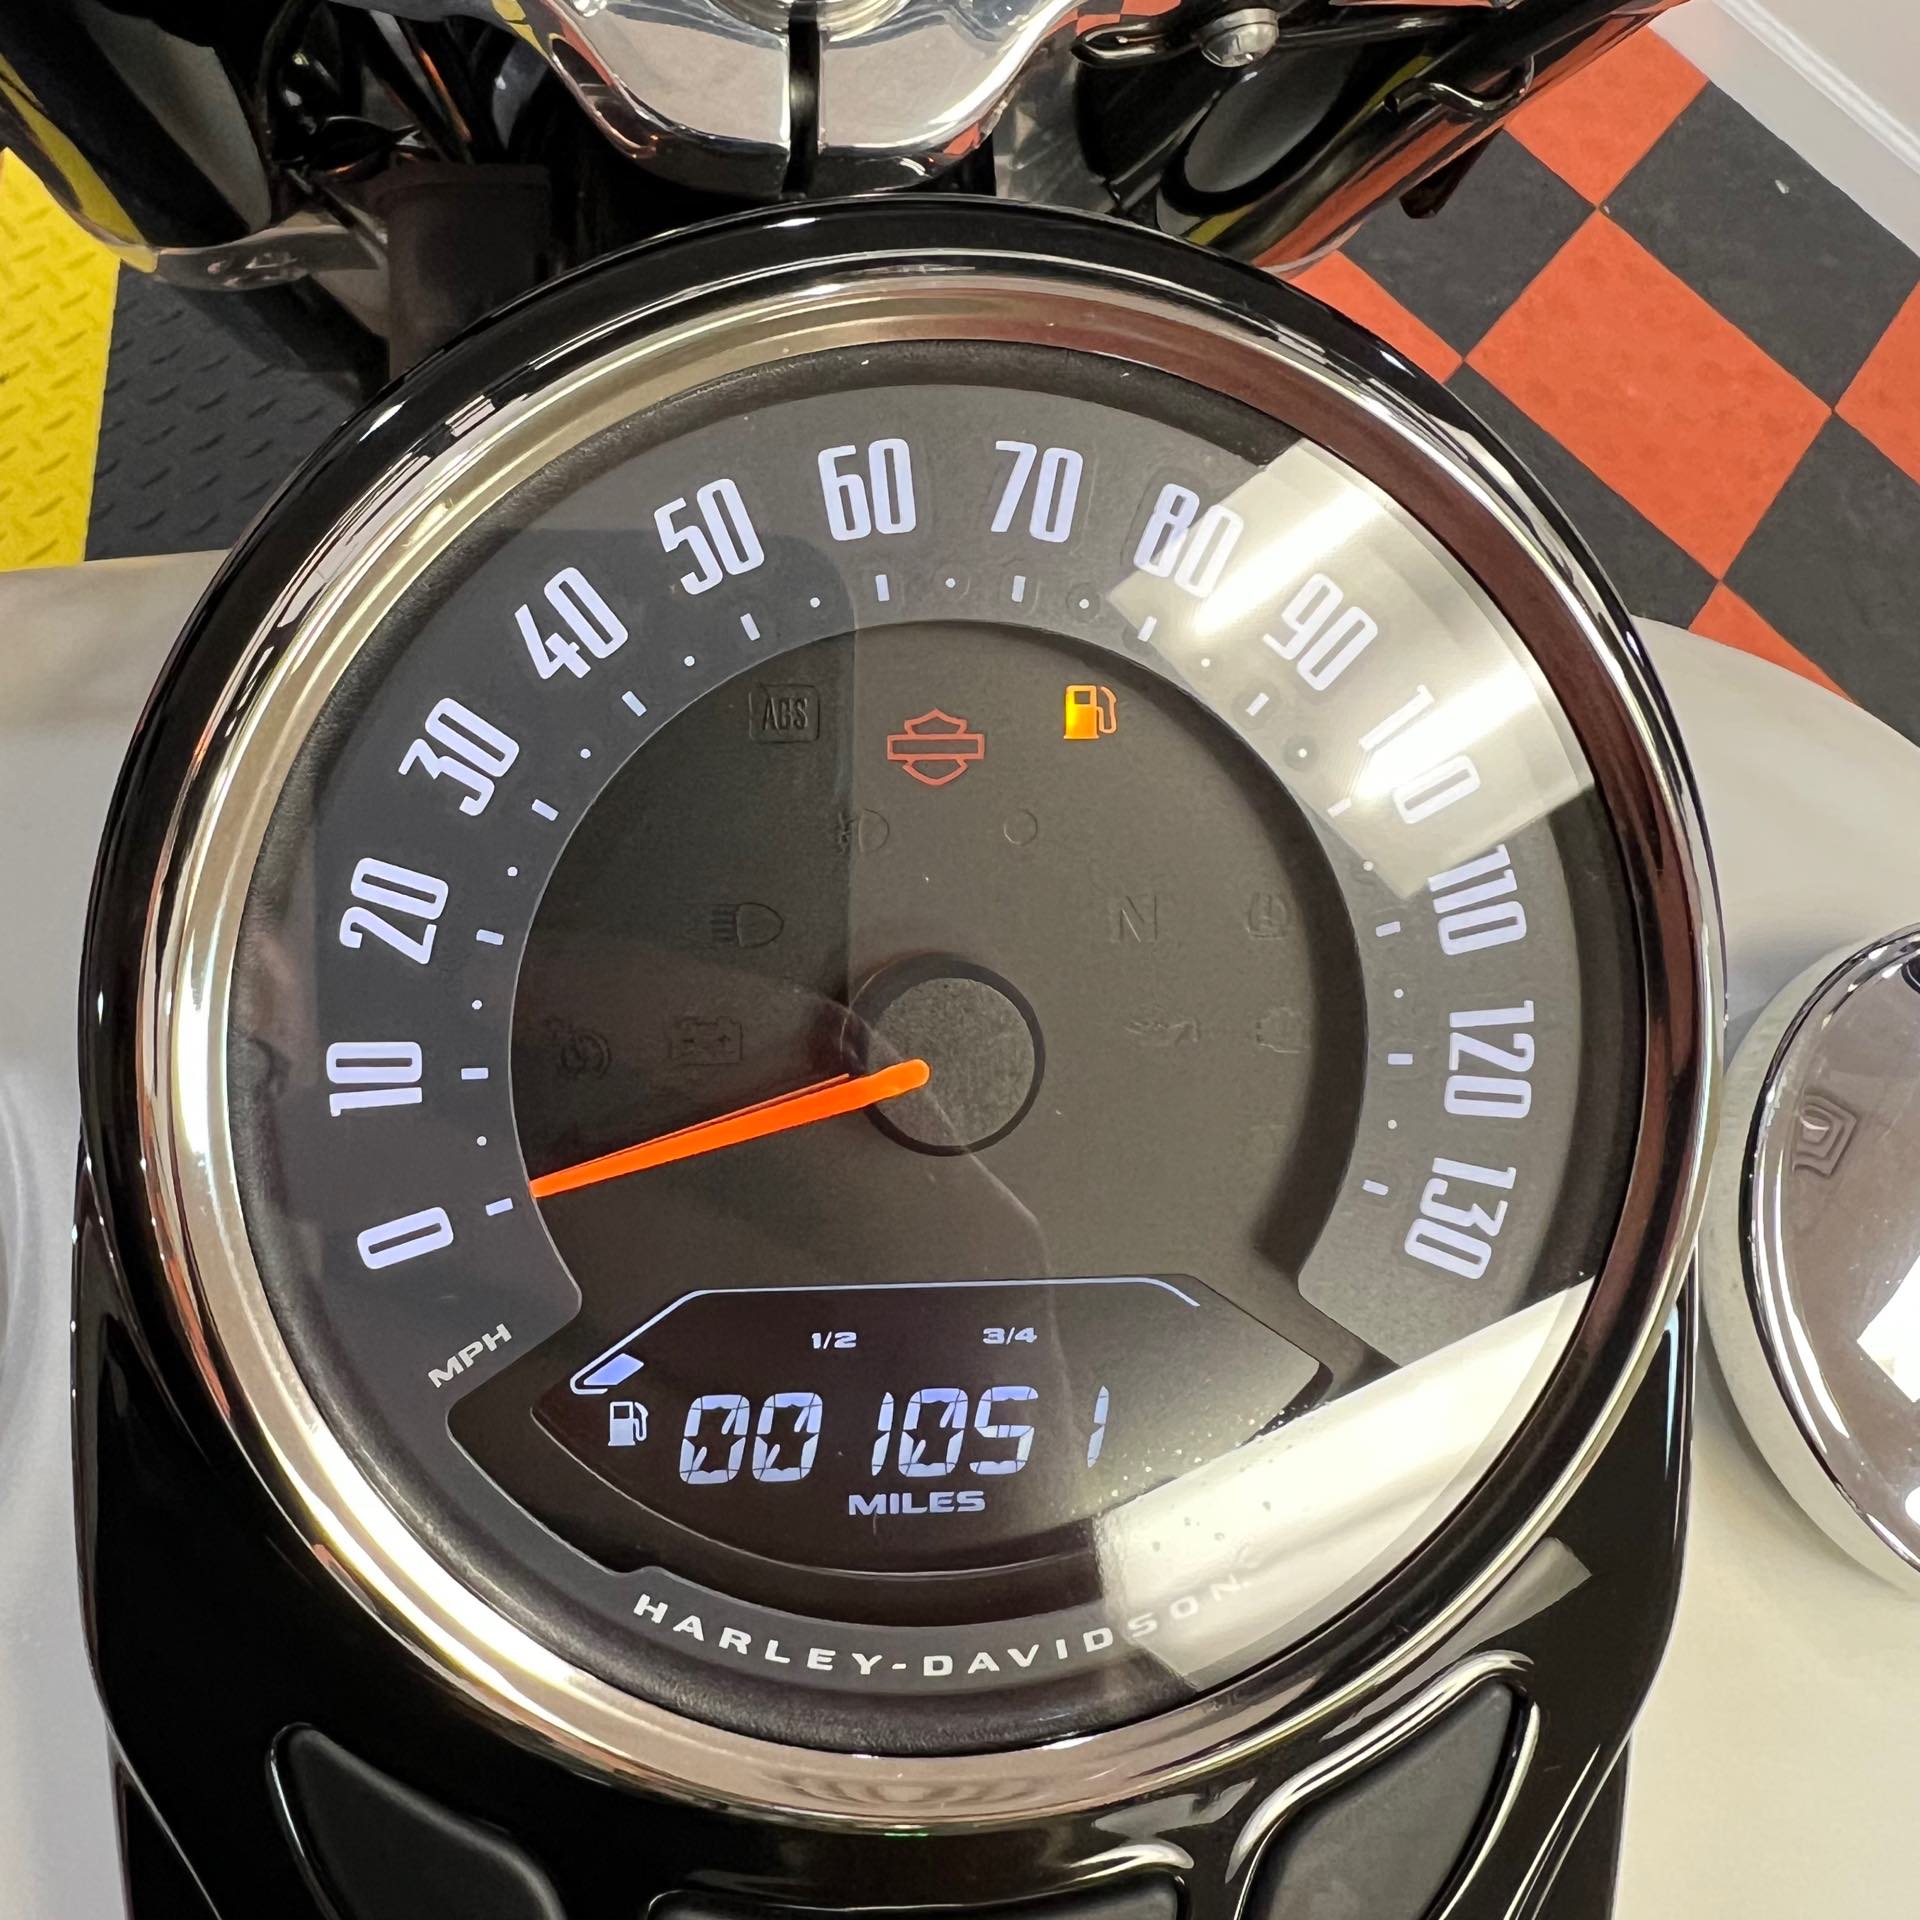 2018 Harley-Davidson Softail Slim at Harley-Davidson of Indianapolis